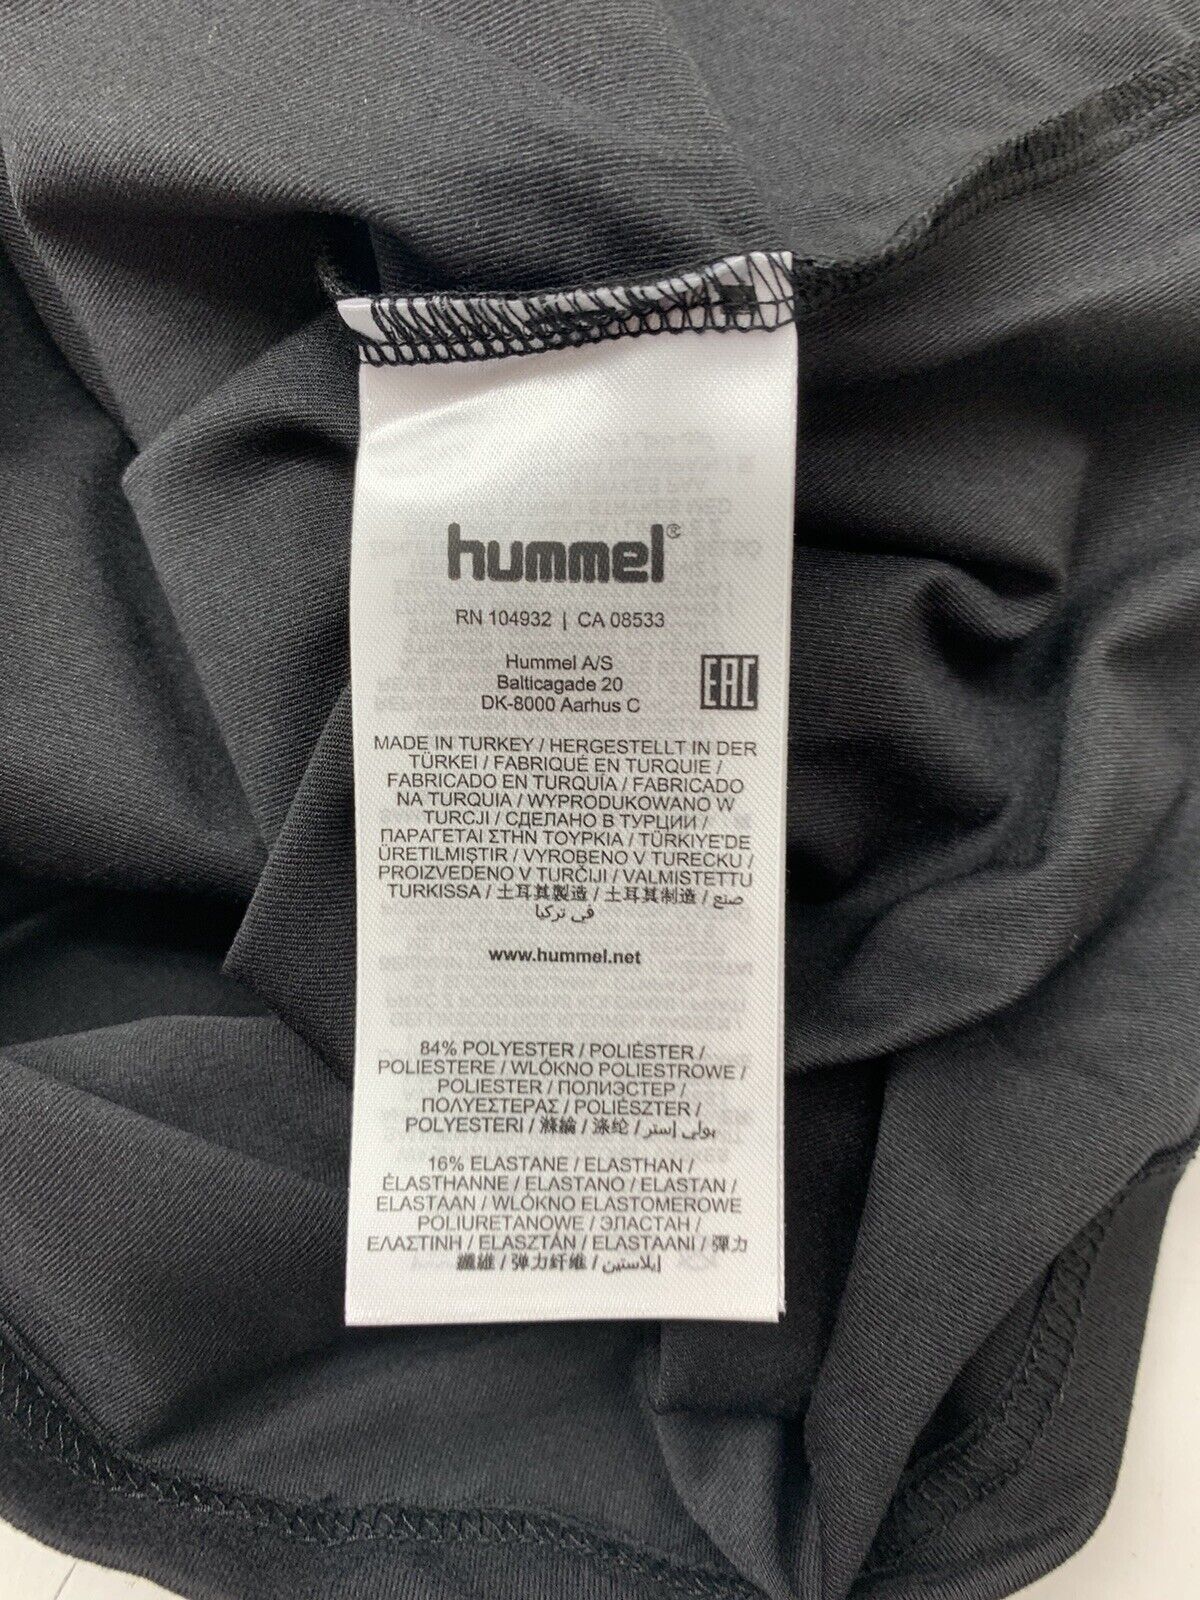 Hummel Size Mens Virgil New - Medium Shirt Black beyond T exchange